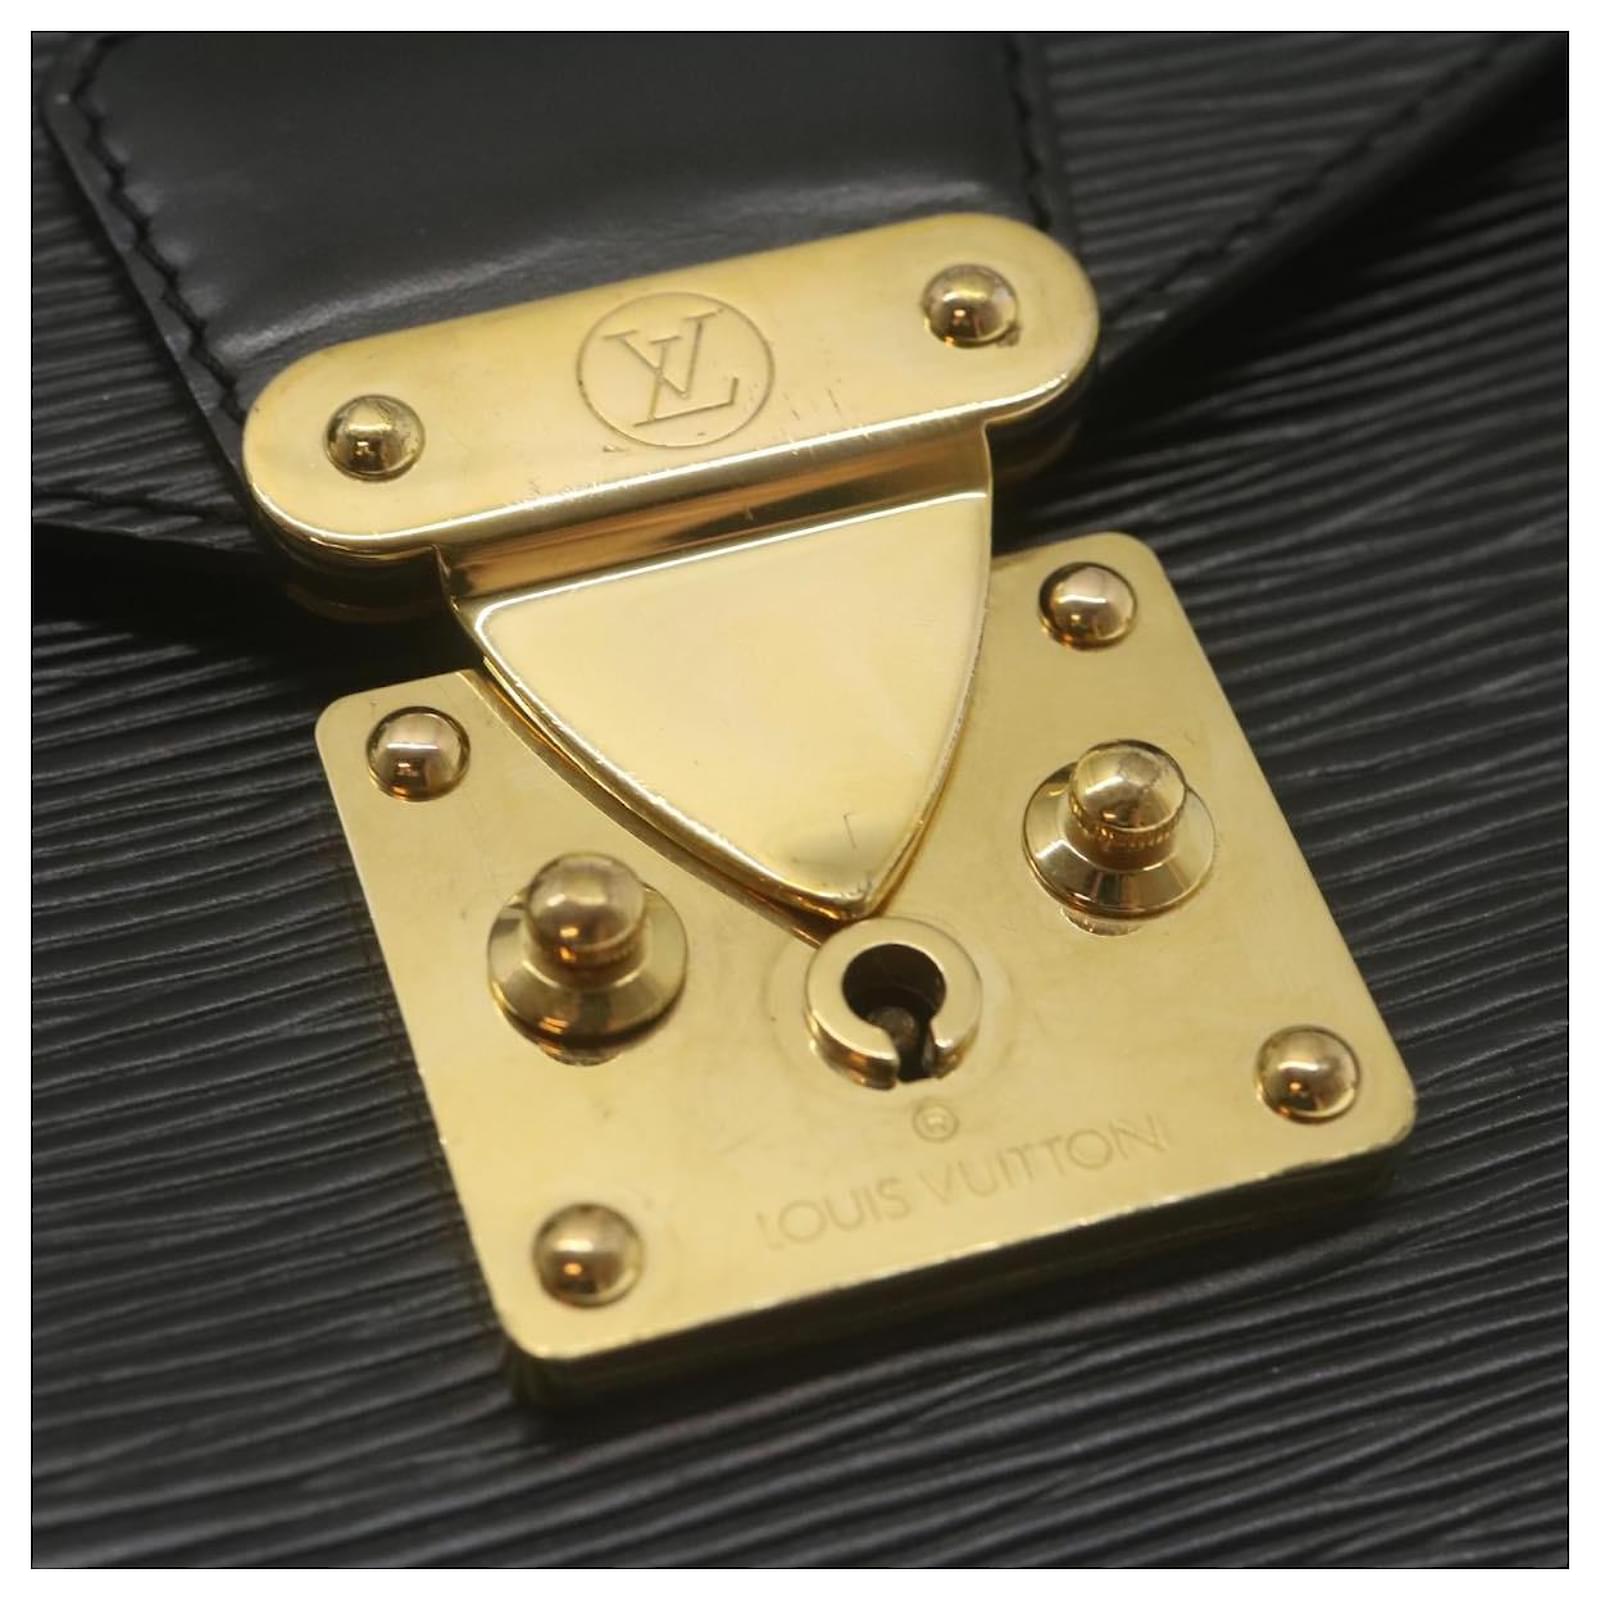 Louis Vuitton Epi Concorde Hand Hobo Bag 65% off retail